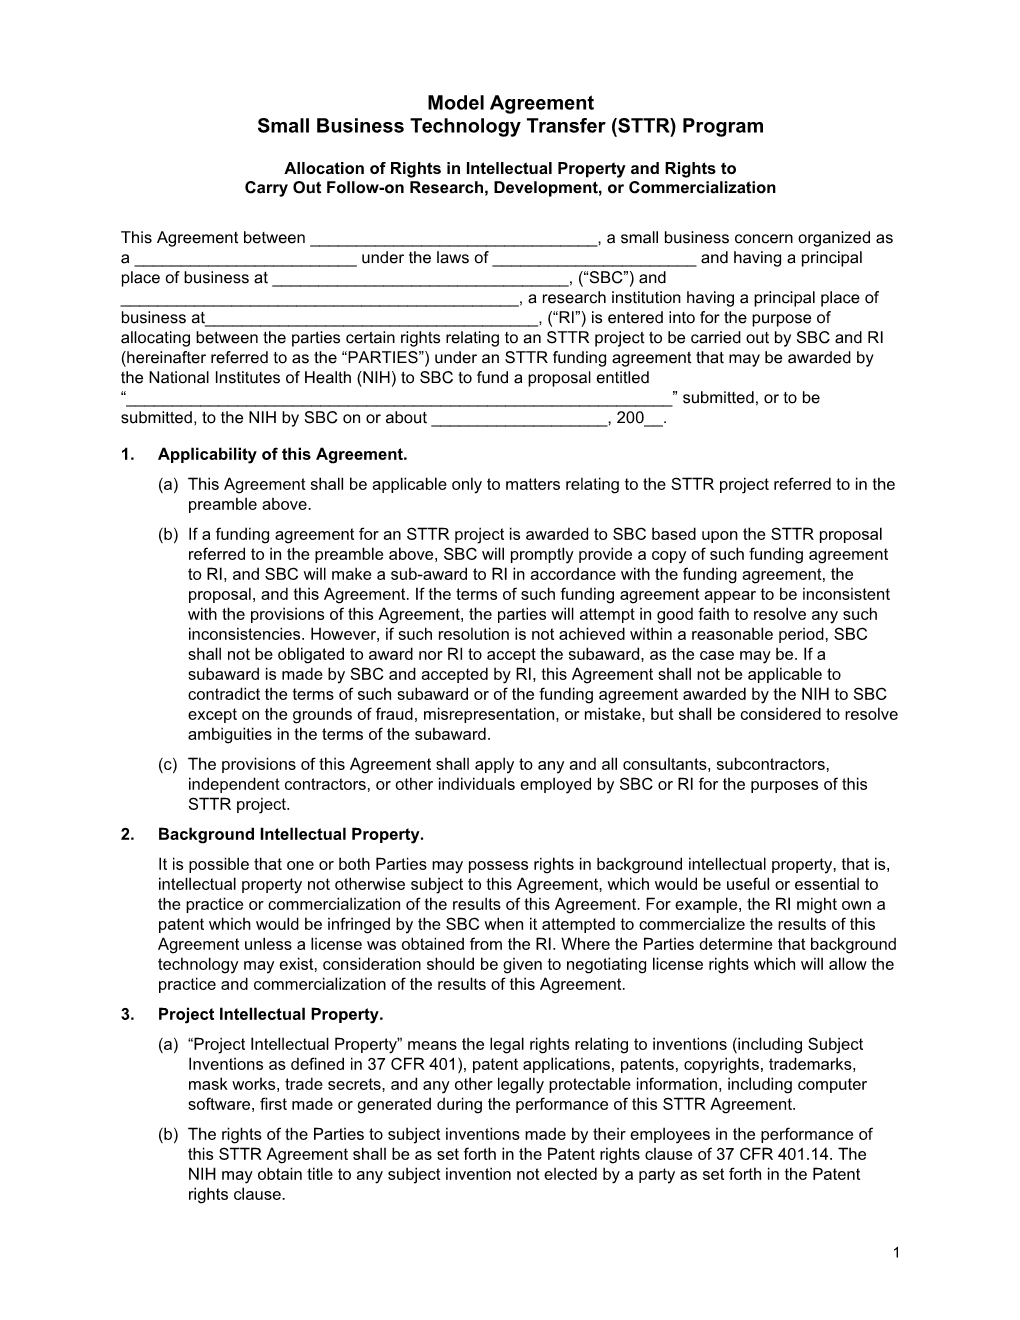 SBIR and STTR Grant Applications - 2001-2 - STTR Model Agreement - Appendix D